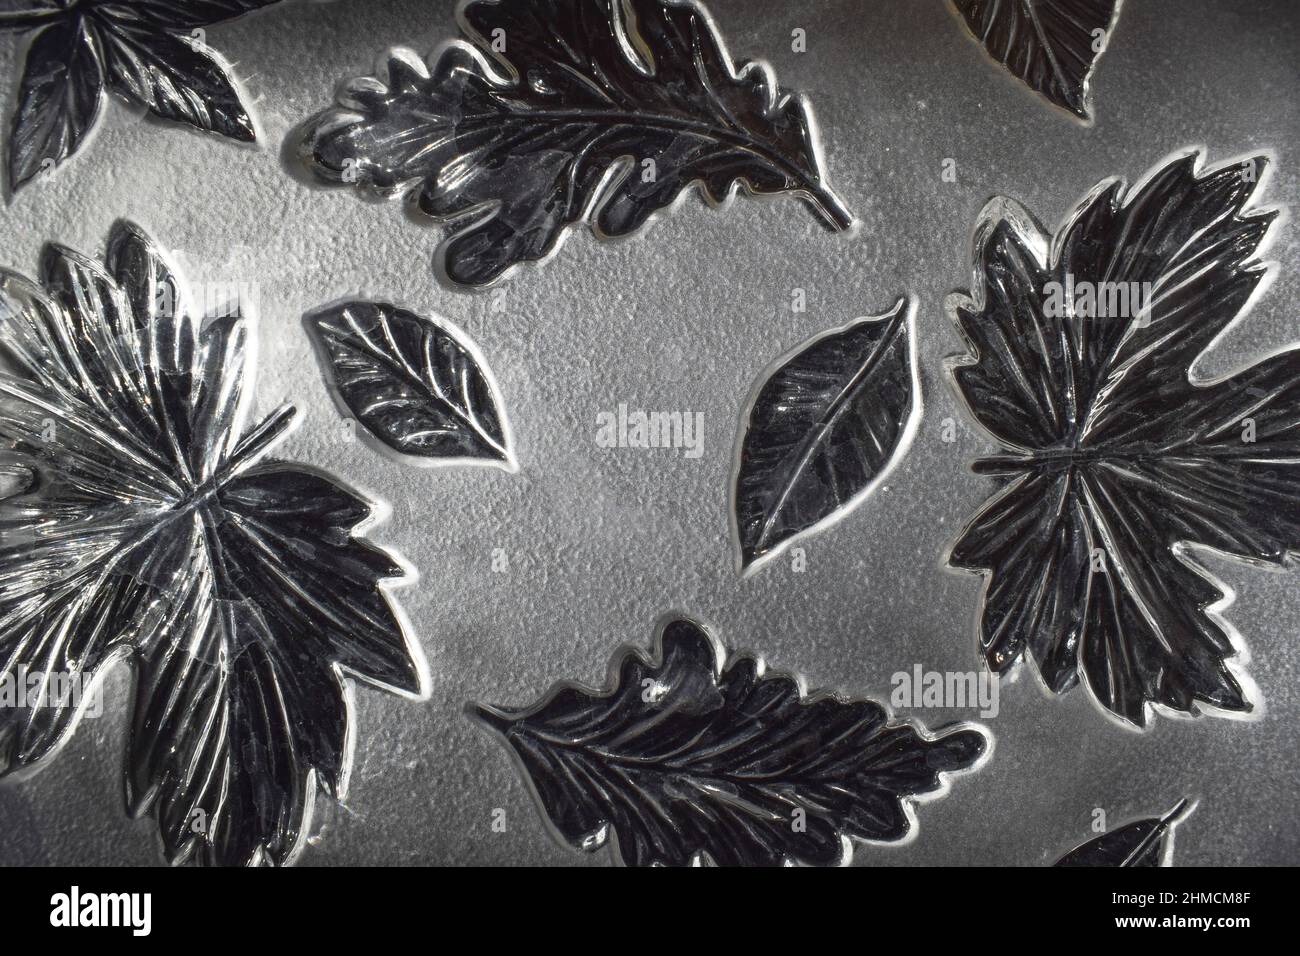 Maple leaf vintage color engraved Royalty Free Vector Image